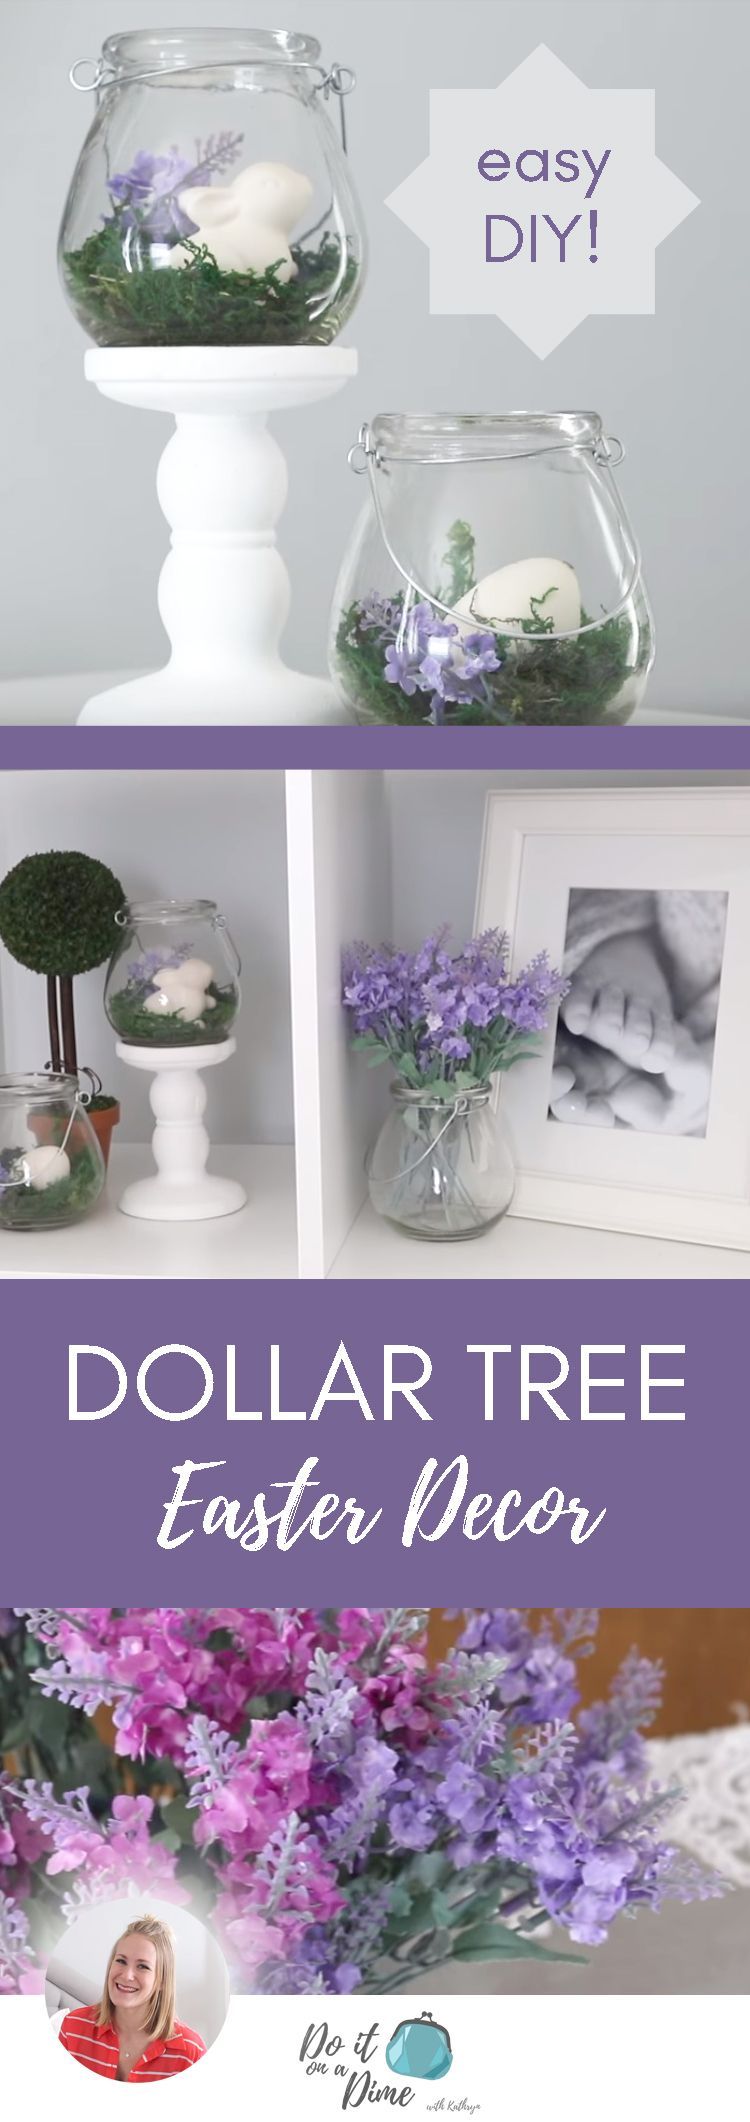 Amazing Dollar Tree Finds & Easter DIY - Amazing Dollar Tree Finds & Easter DIY -   25 diy Dollar Tree easter ideas